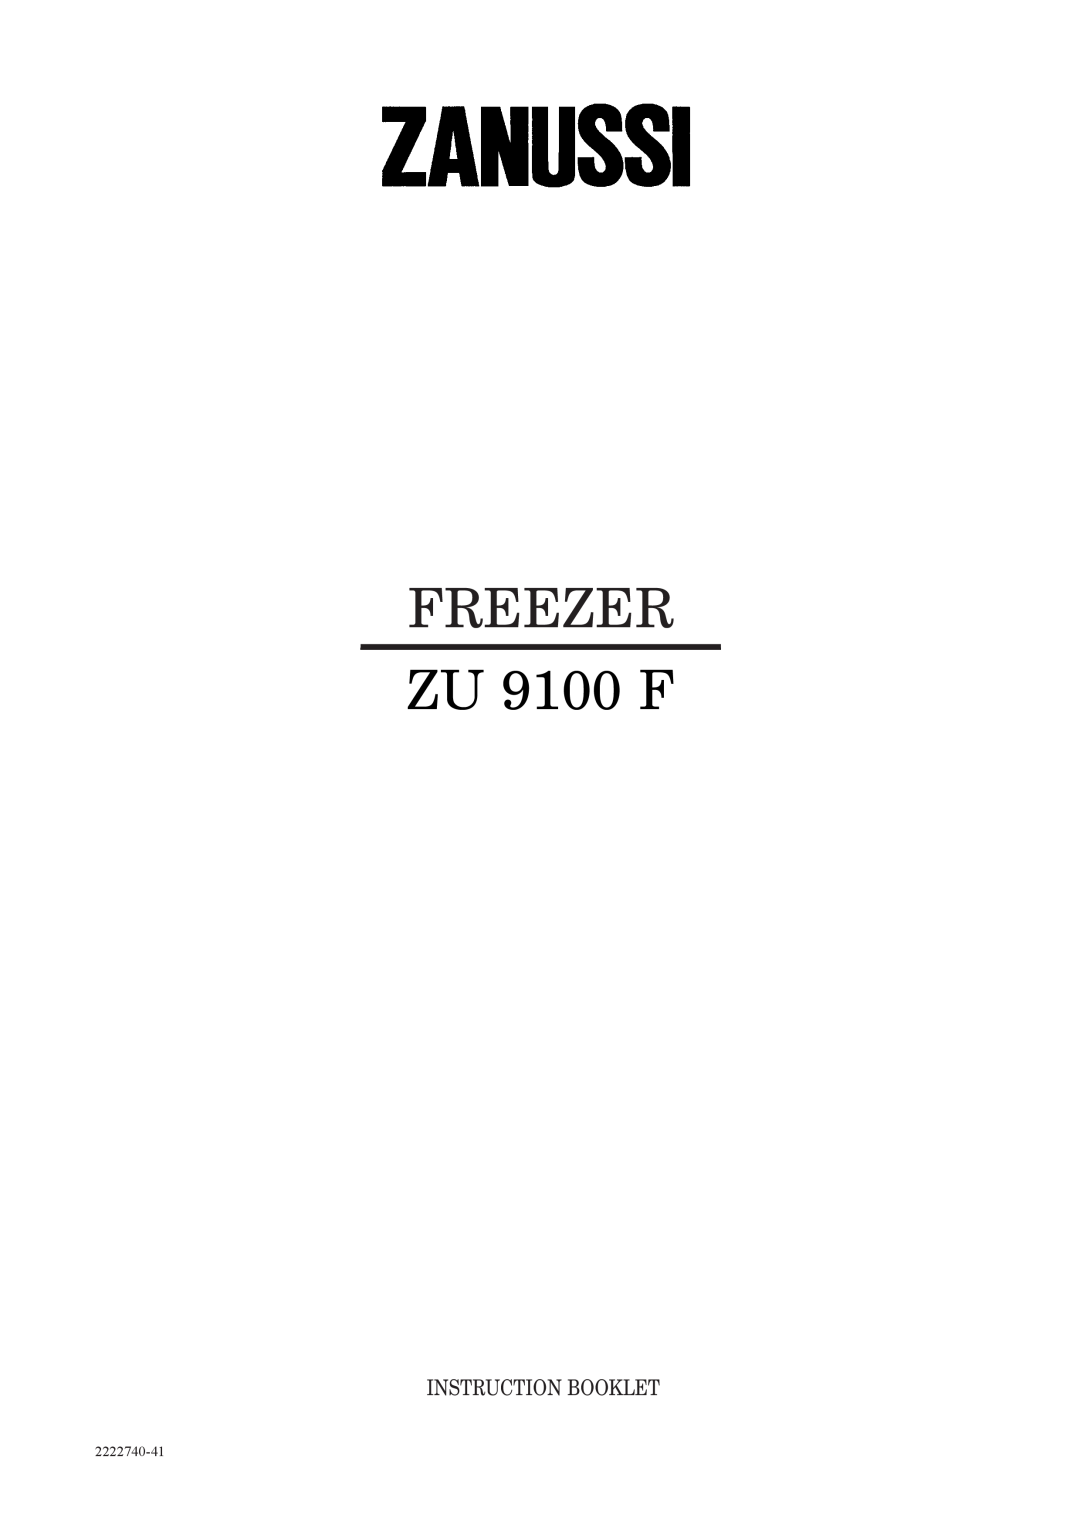 Zanussi manual Instruction Booklet, FREEZER ZU 9100 F, 2222740-41 